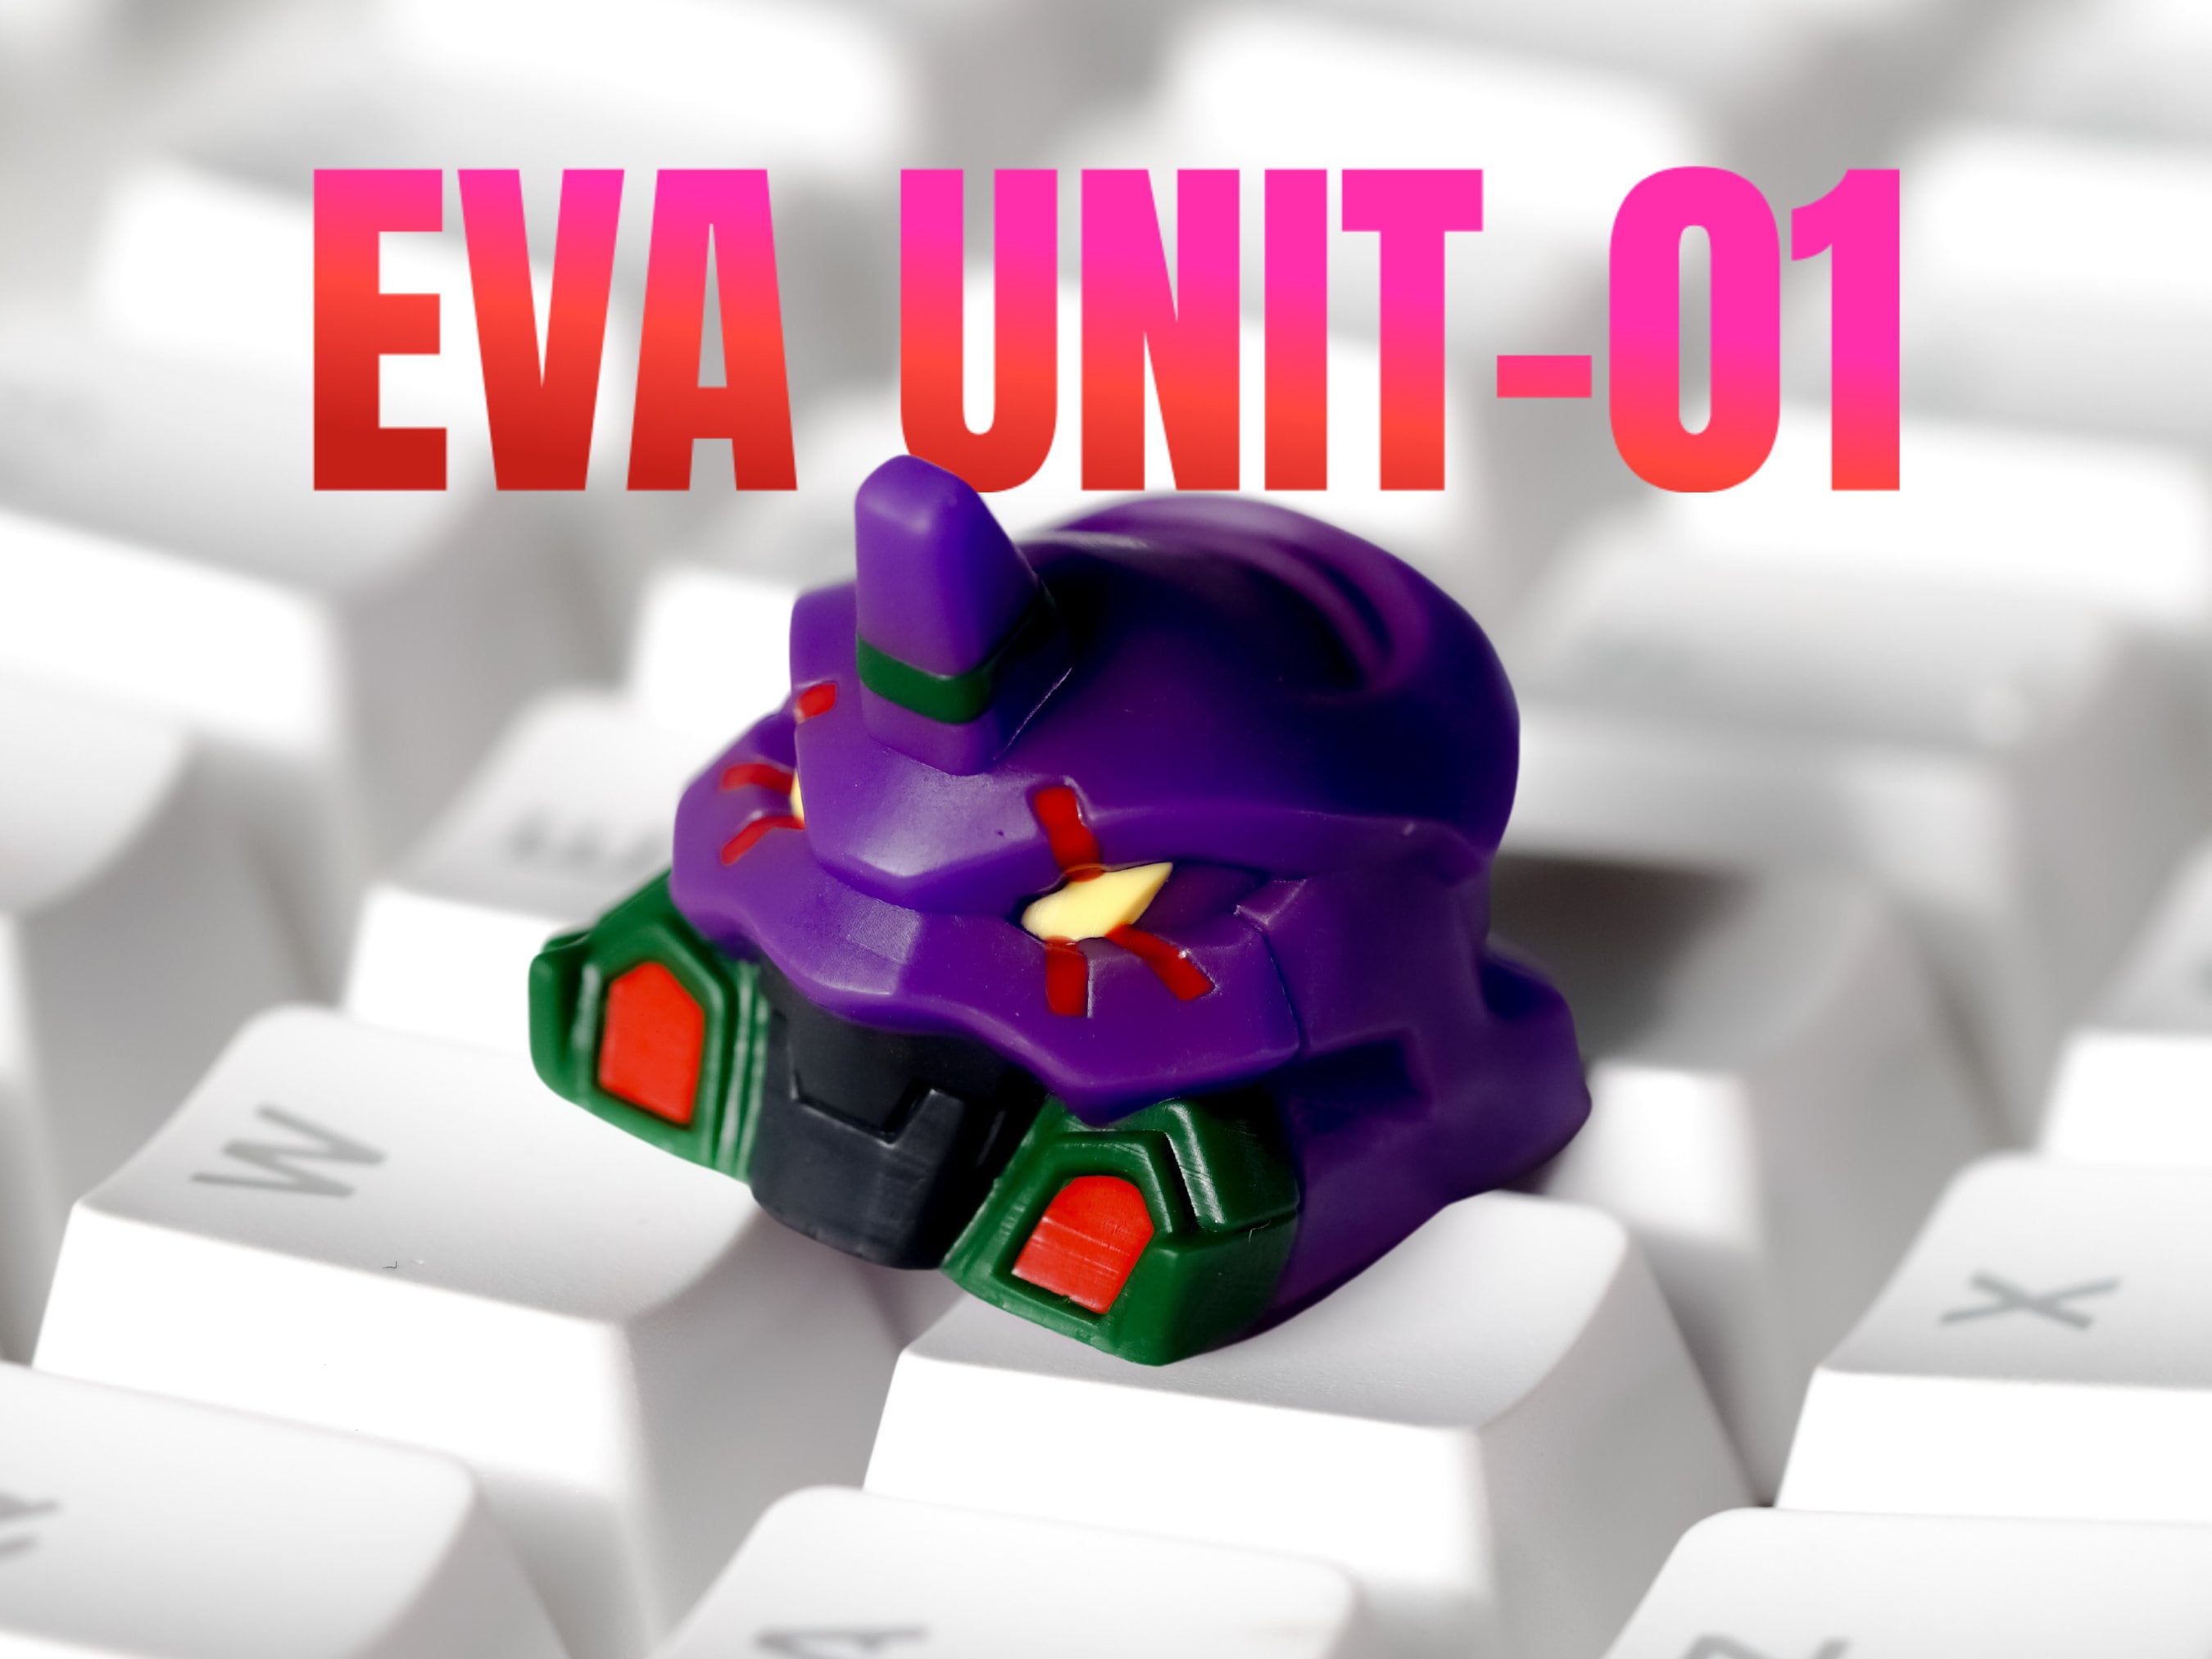 E.v.a U.nit-01  Keycap, E-vange.lion Keycap, Anime Keycap, Keycap for MX Cherry Switches Mechanical Keyboard, Handmade Anime Gift